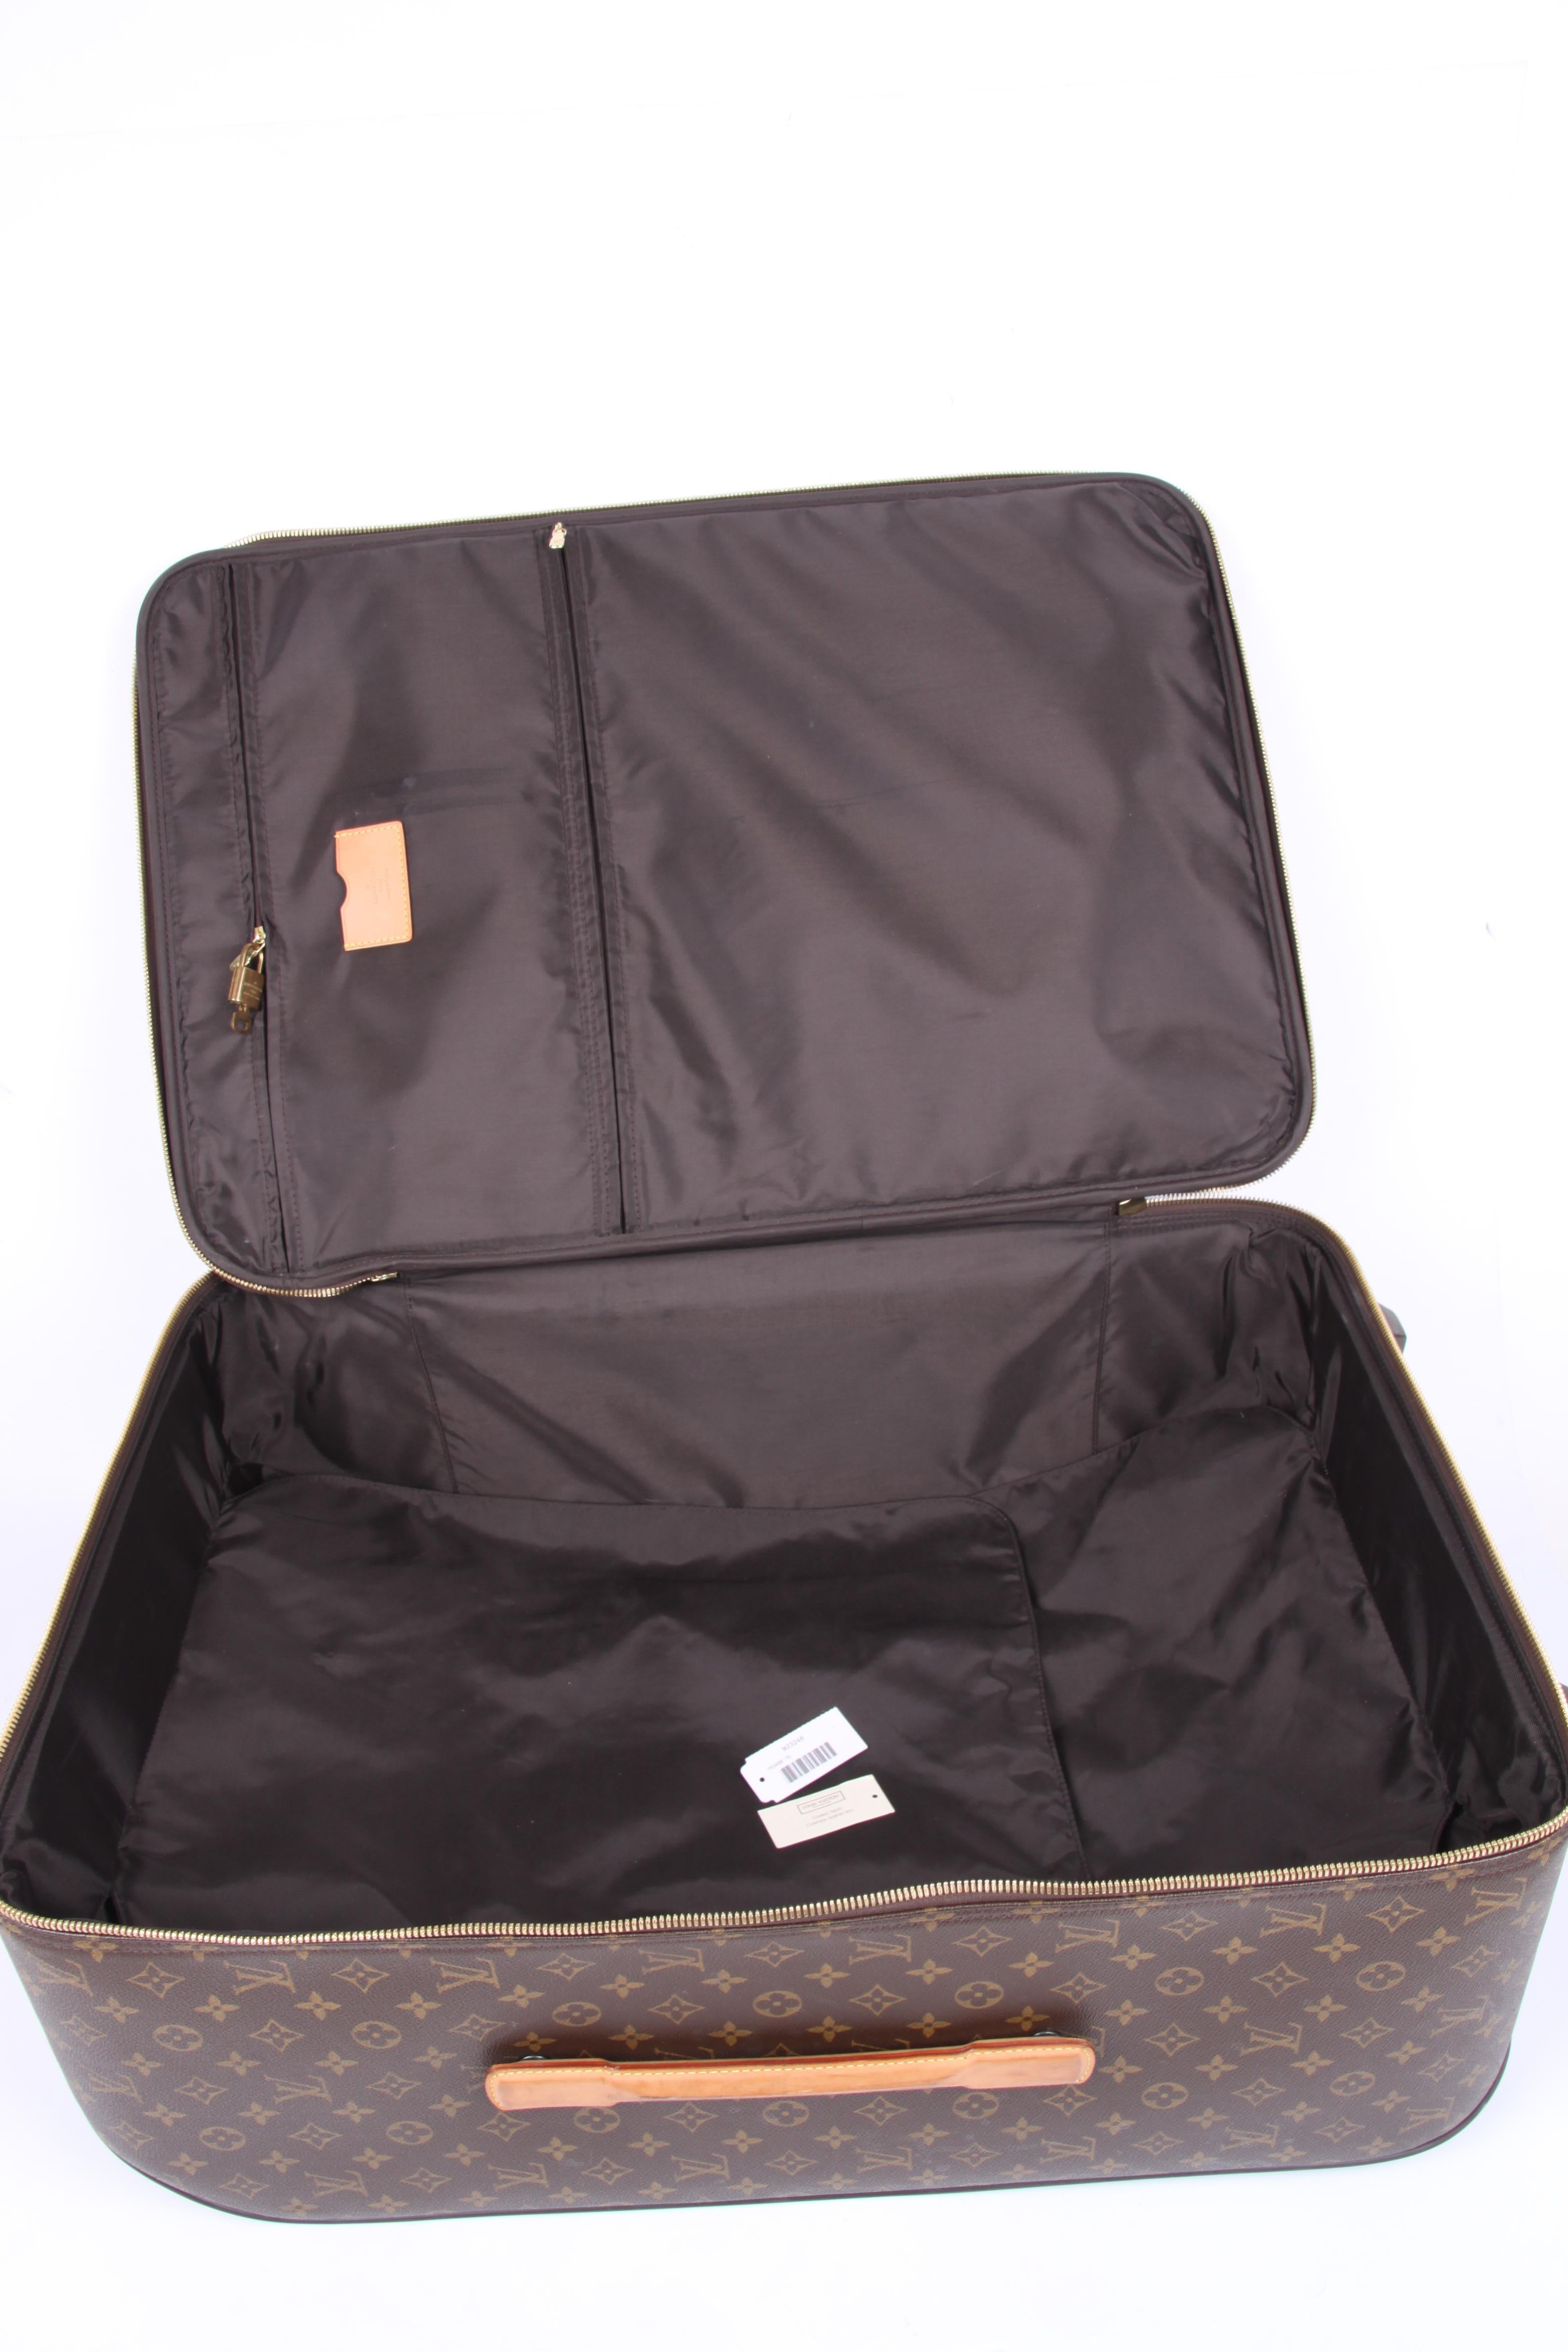 Louis Vuitton Pegase 70 Monogram Suitcase - brown 5